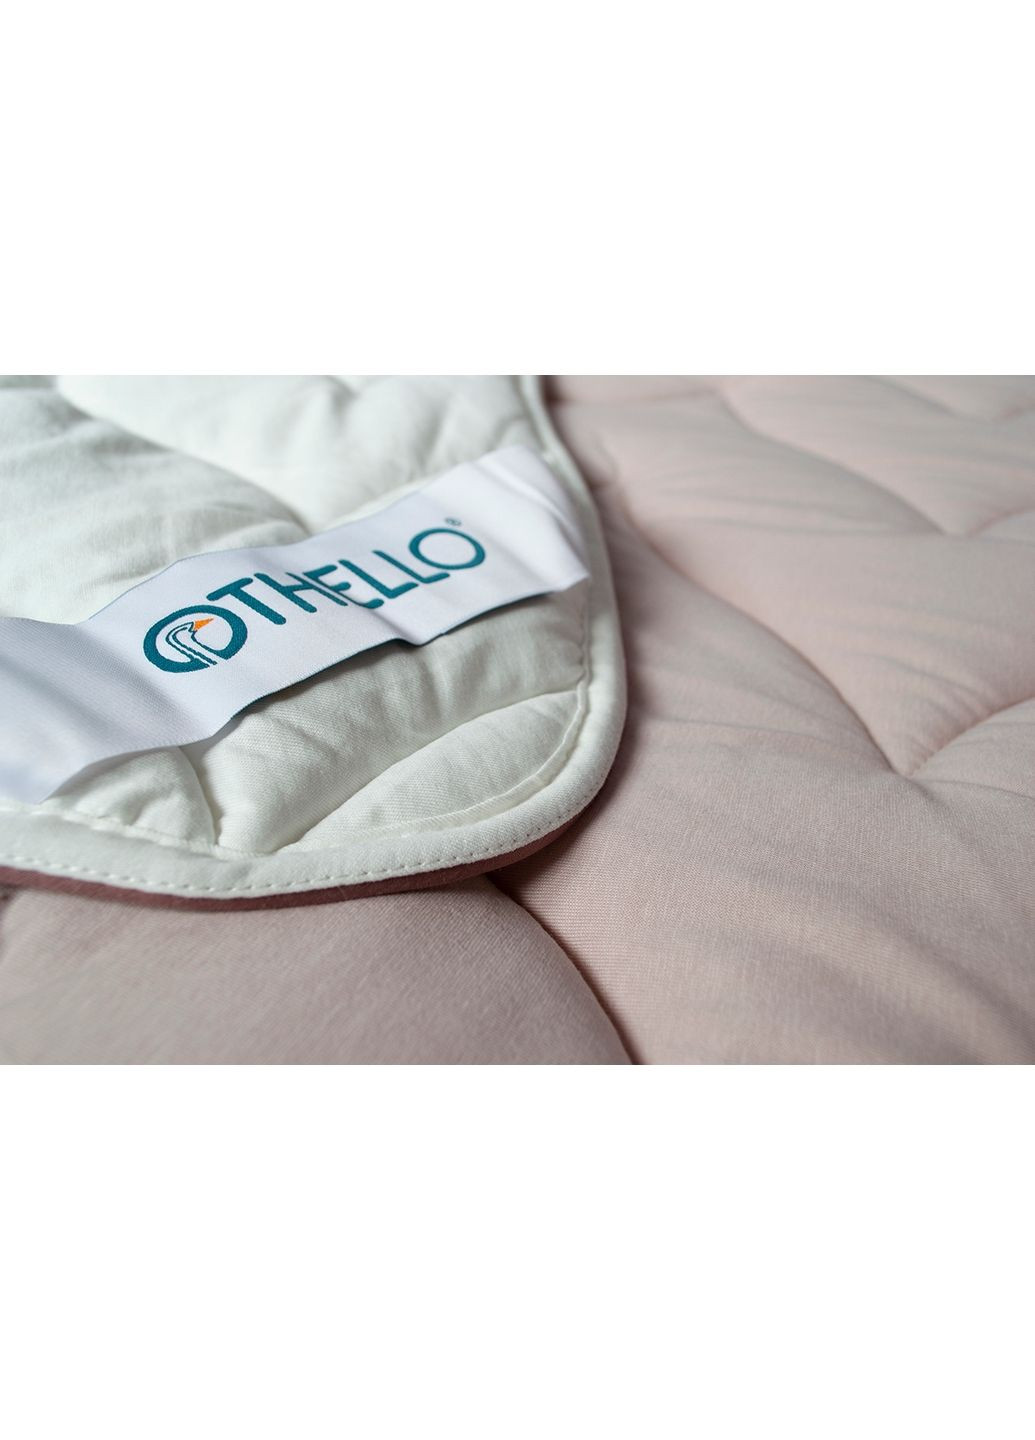 Одеяло антиаллергенное colora lilac/cream Othello (282590470)